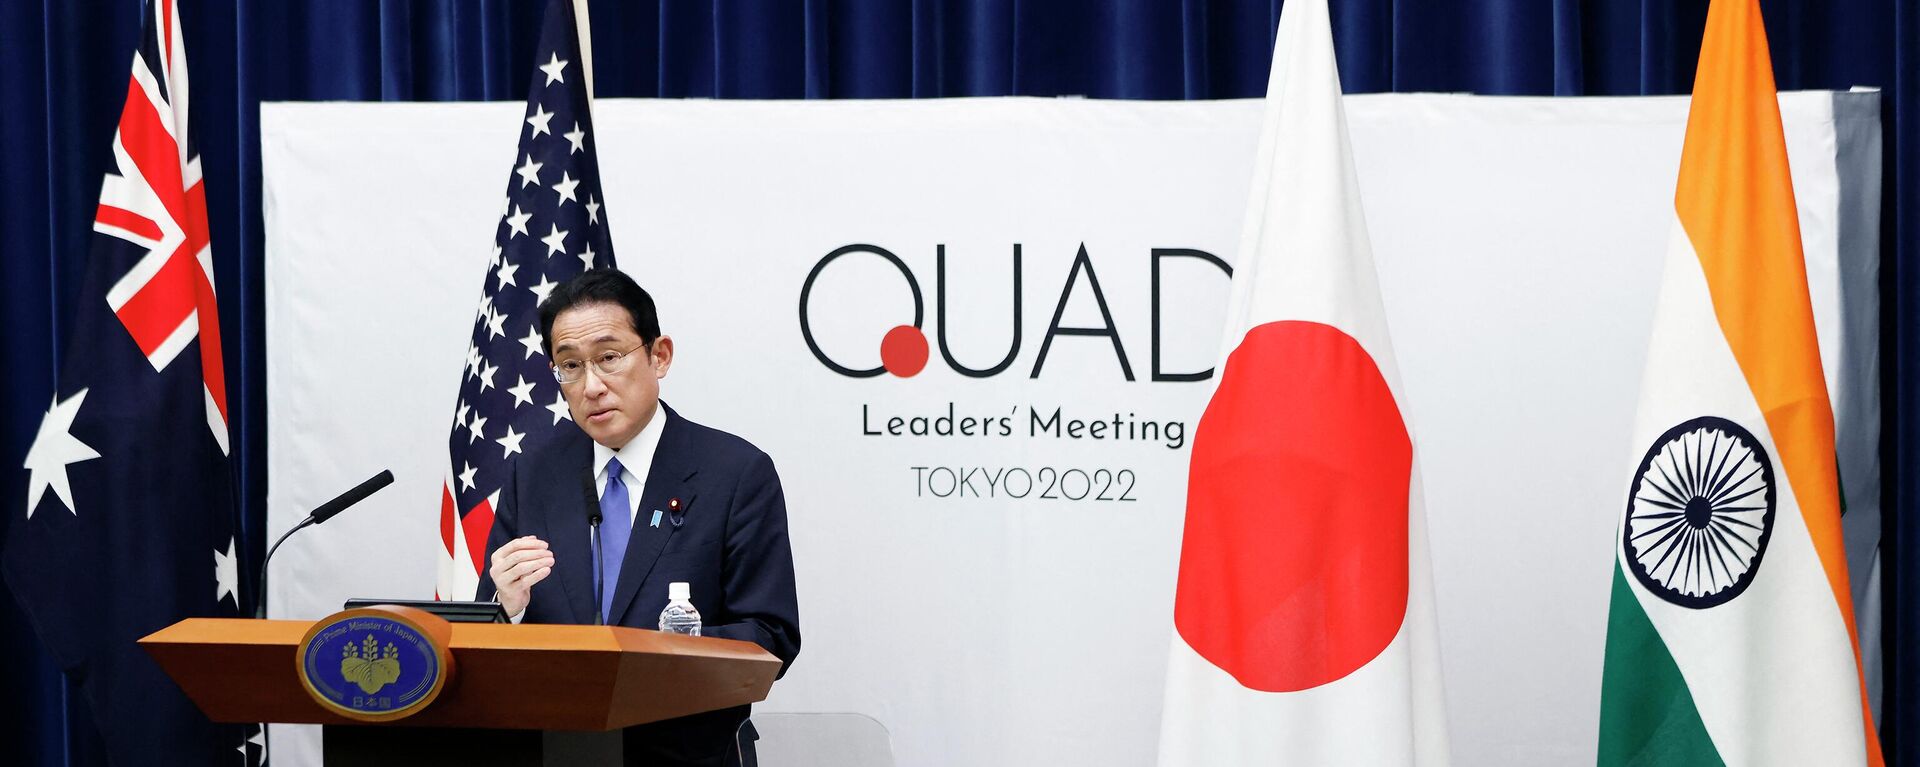 El primer ministro de Japón, Fumio Kishida, habla en la cumbre del Diálogo de Seguridad Cuatrilateral (QUAD)  - Sputnik Mundo, 1920, 24.05.2022